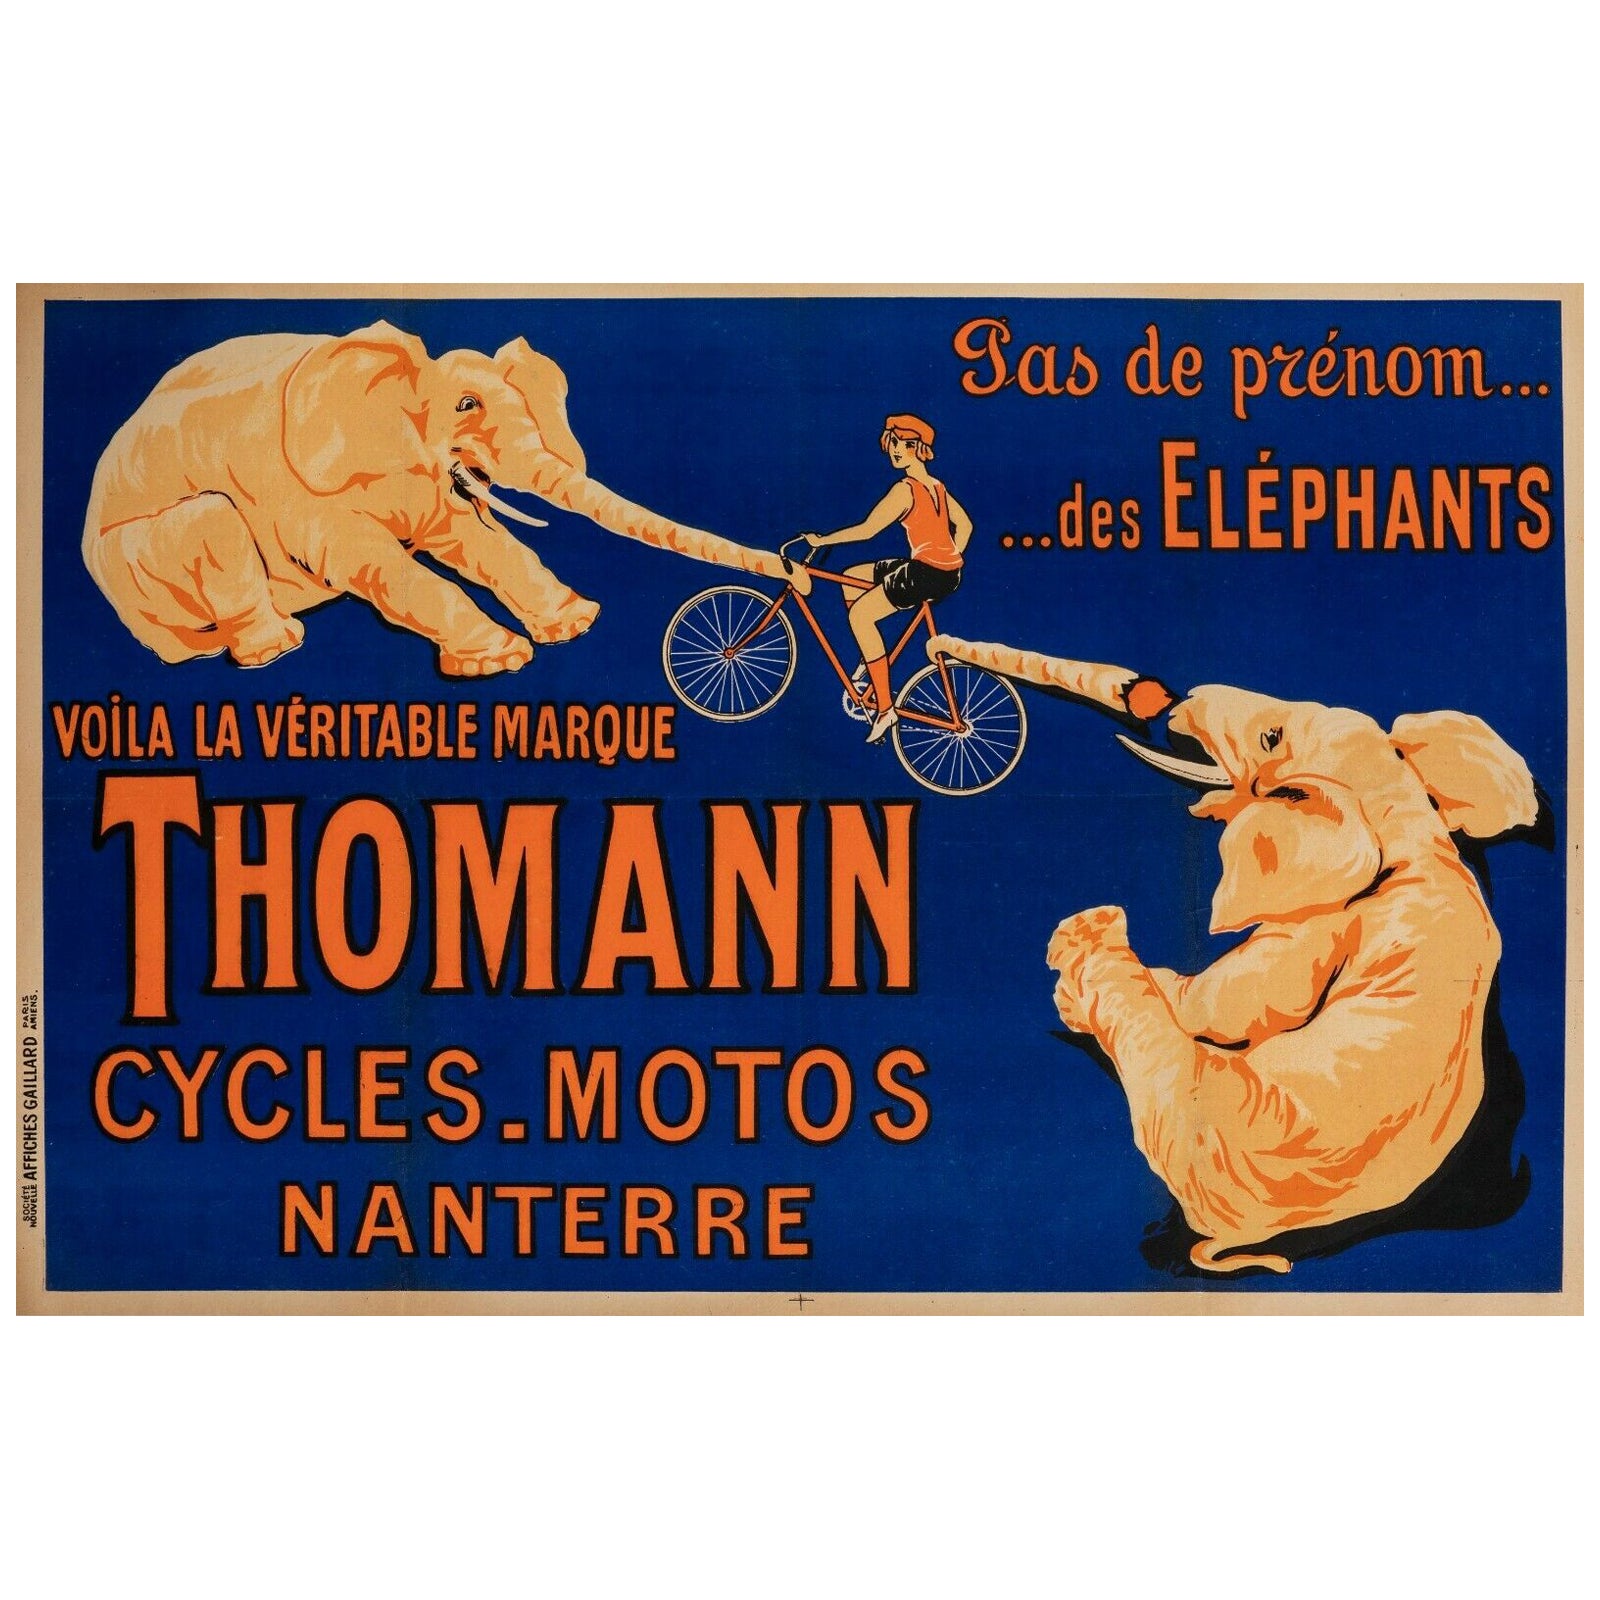 Original Vintage Poster-Cycles Motos Thomann-Elephant-Bike, 1926 For Sale